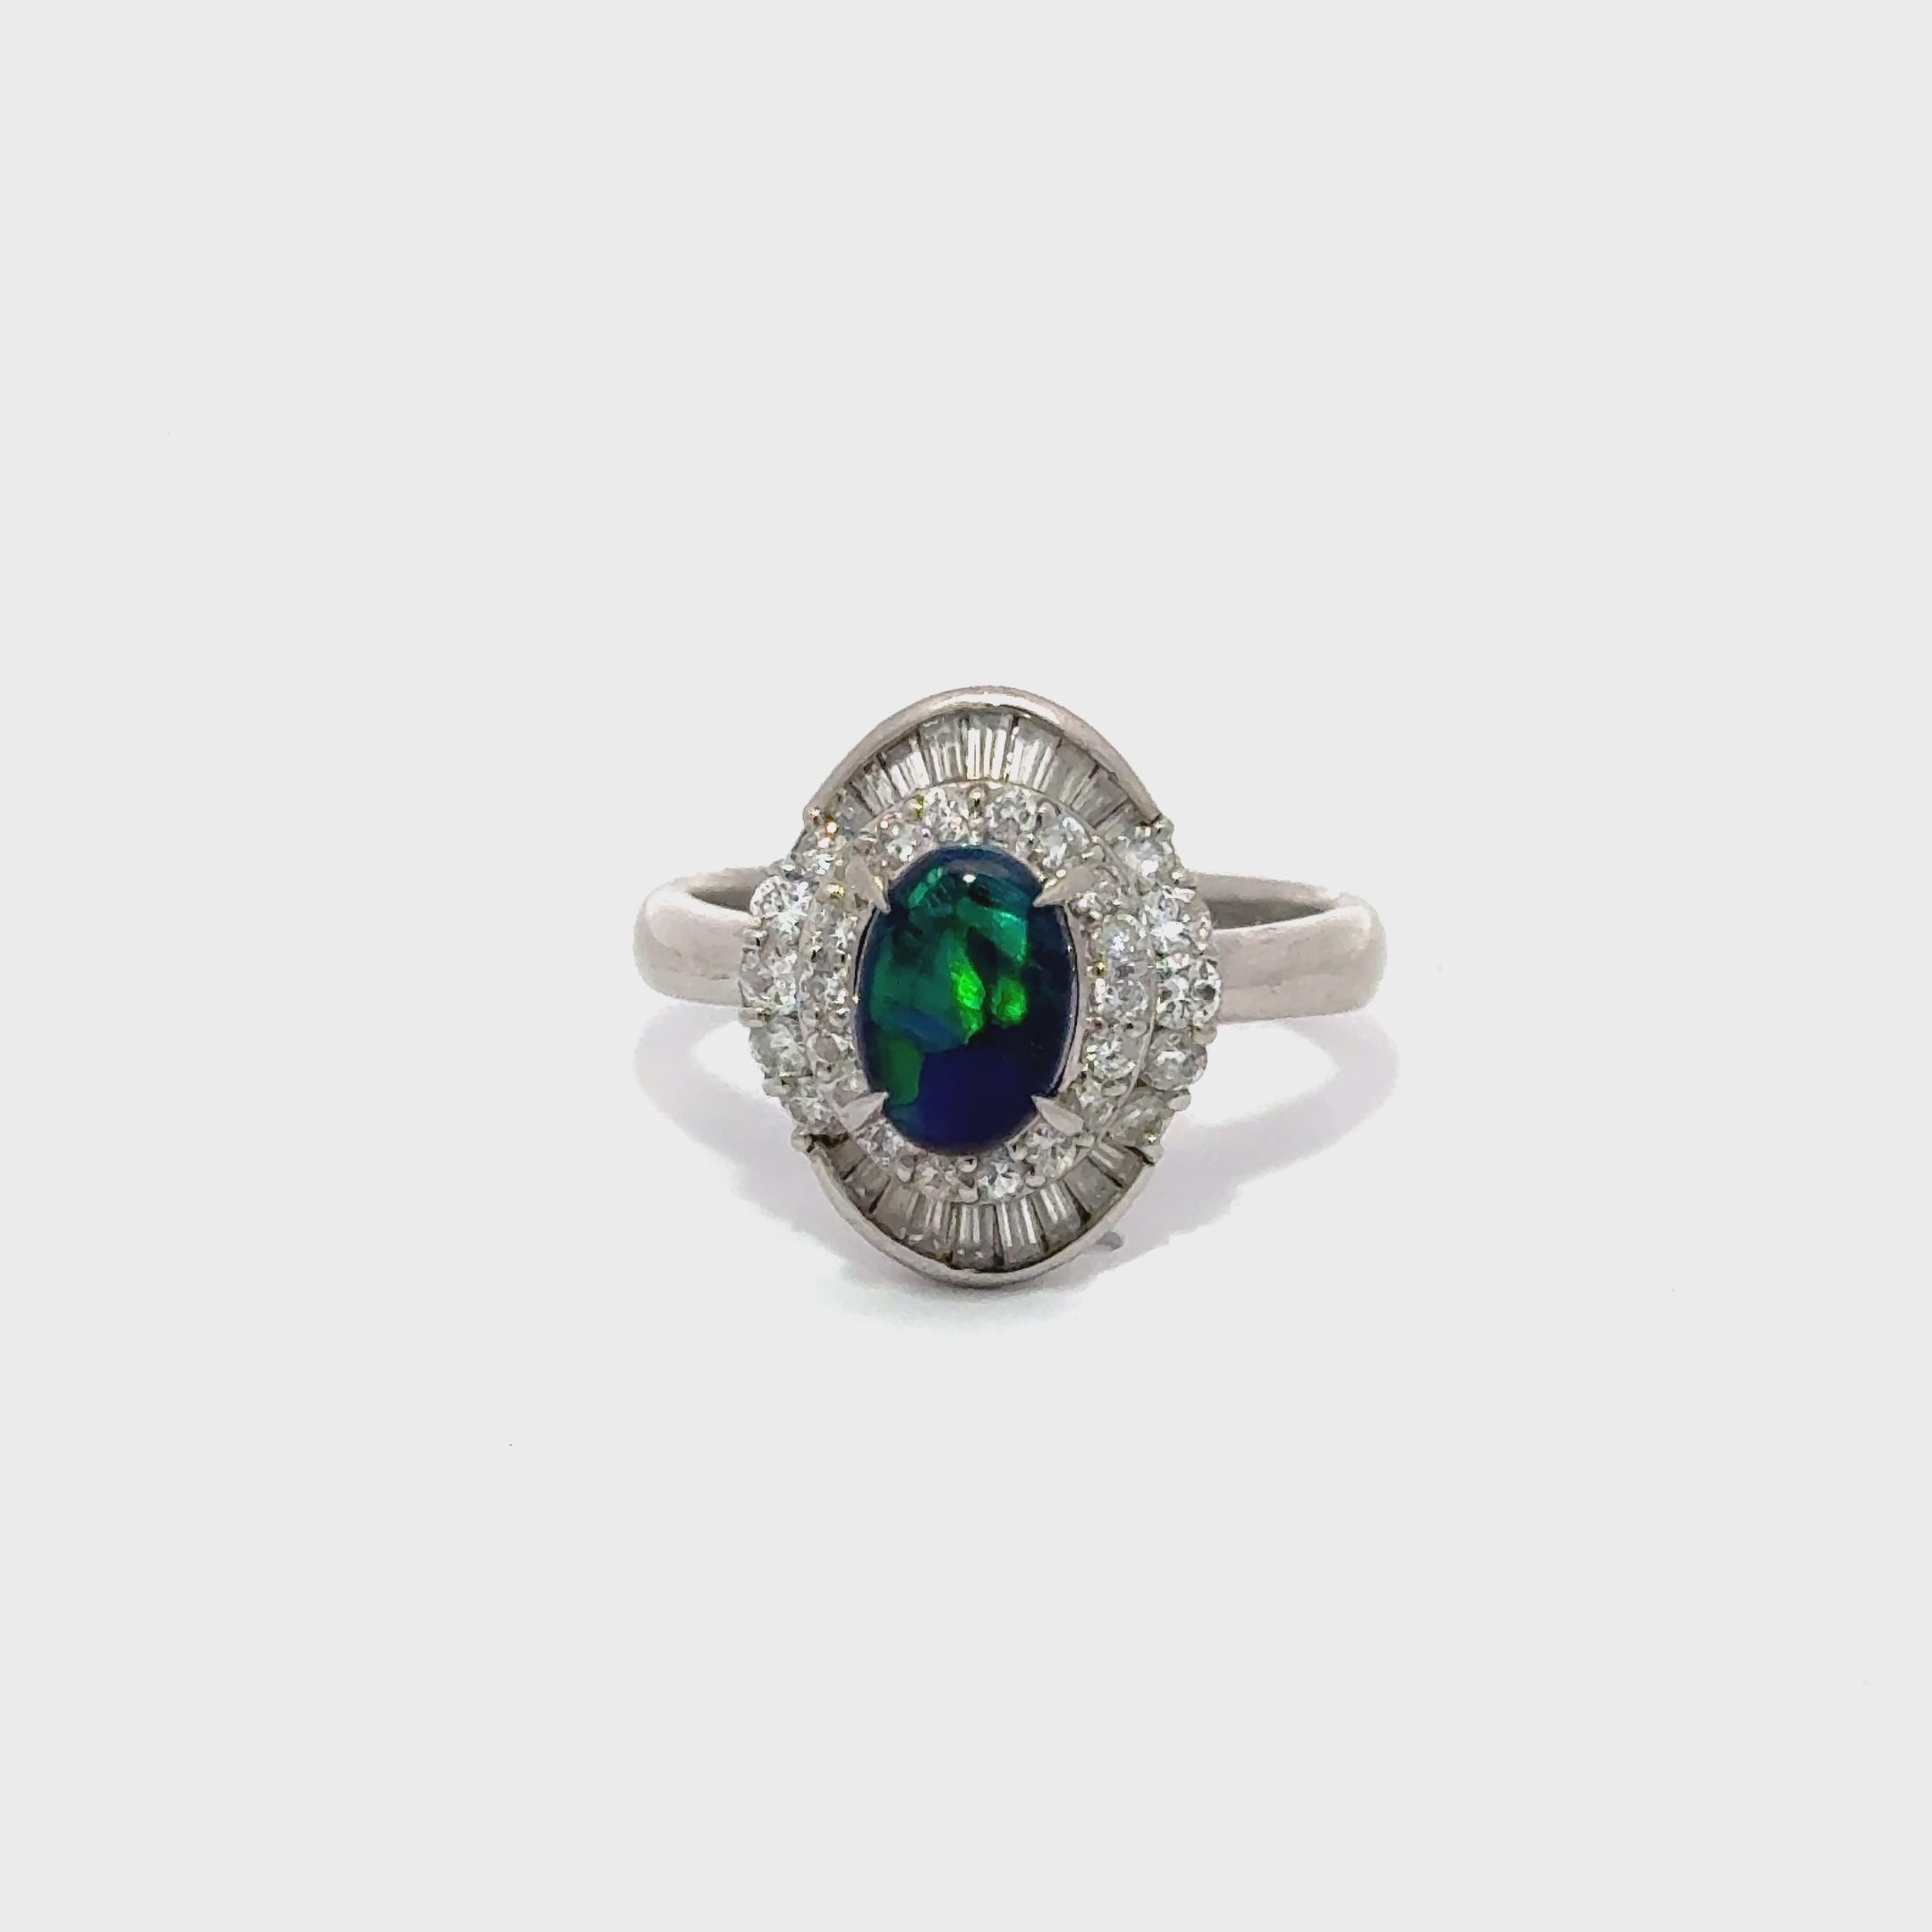 Black Opal With A Halo Of Diamonds